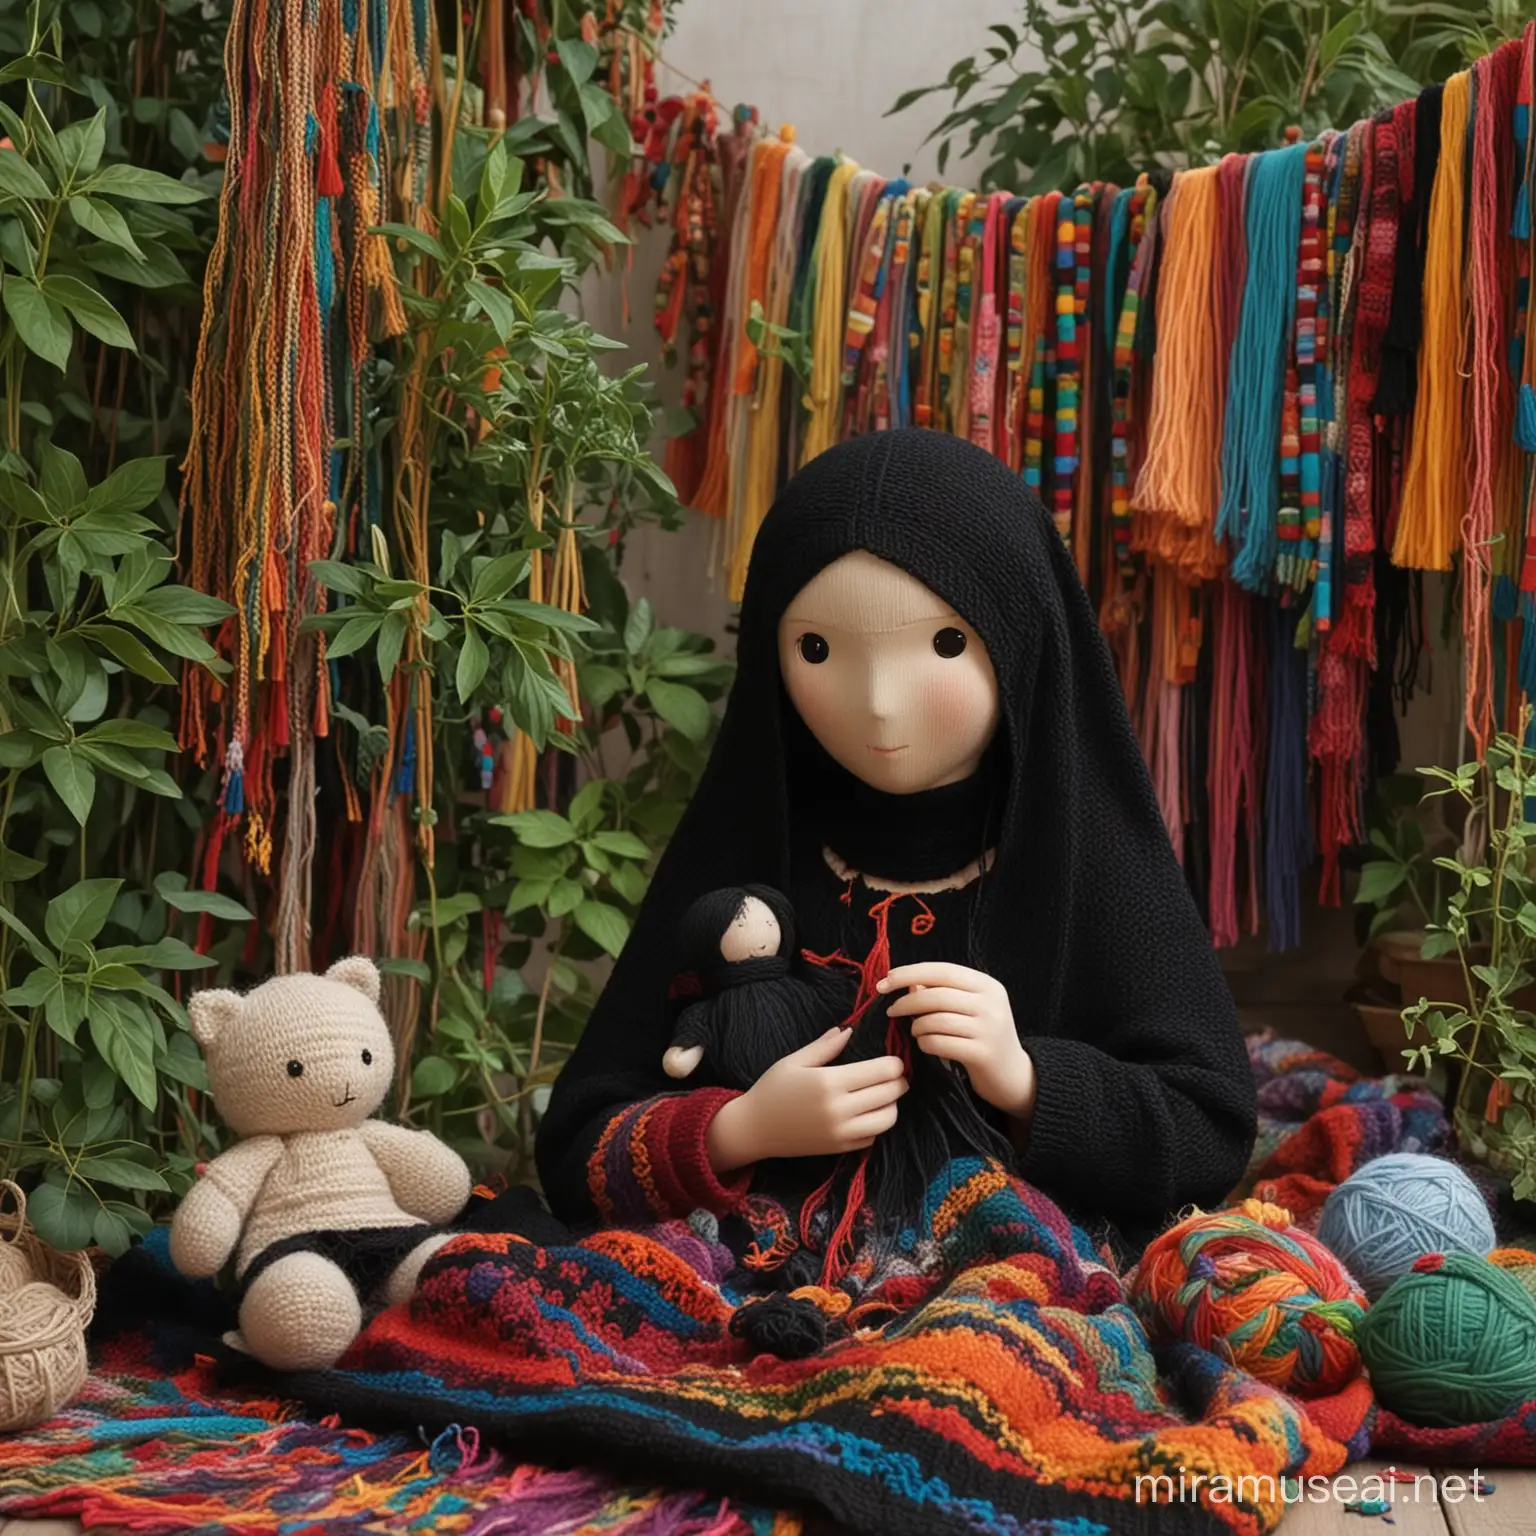 Mysterious Girl Knitting Among HandWoven Dolls and Colorful Fabrics